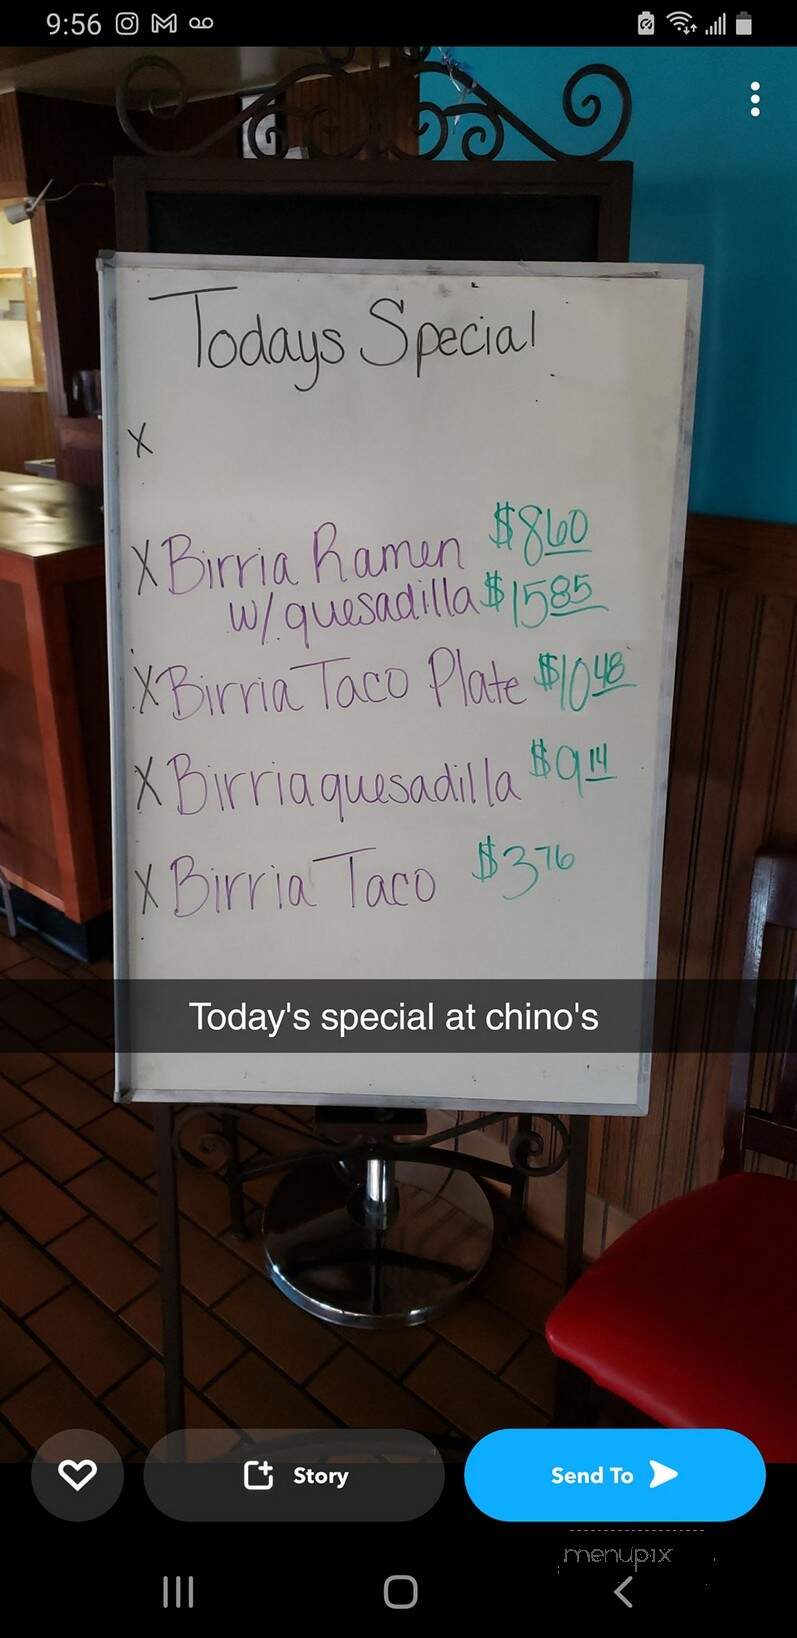 Chino's Mexican Restaurant - Gering, NE